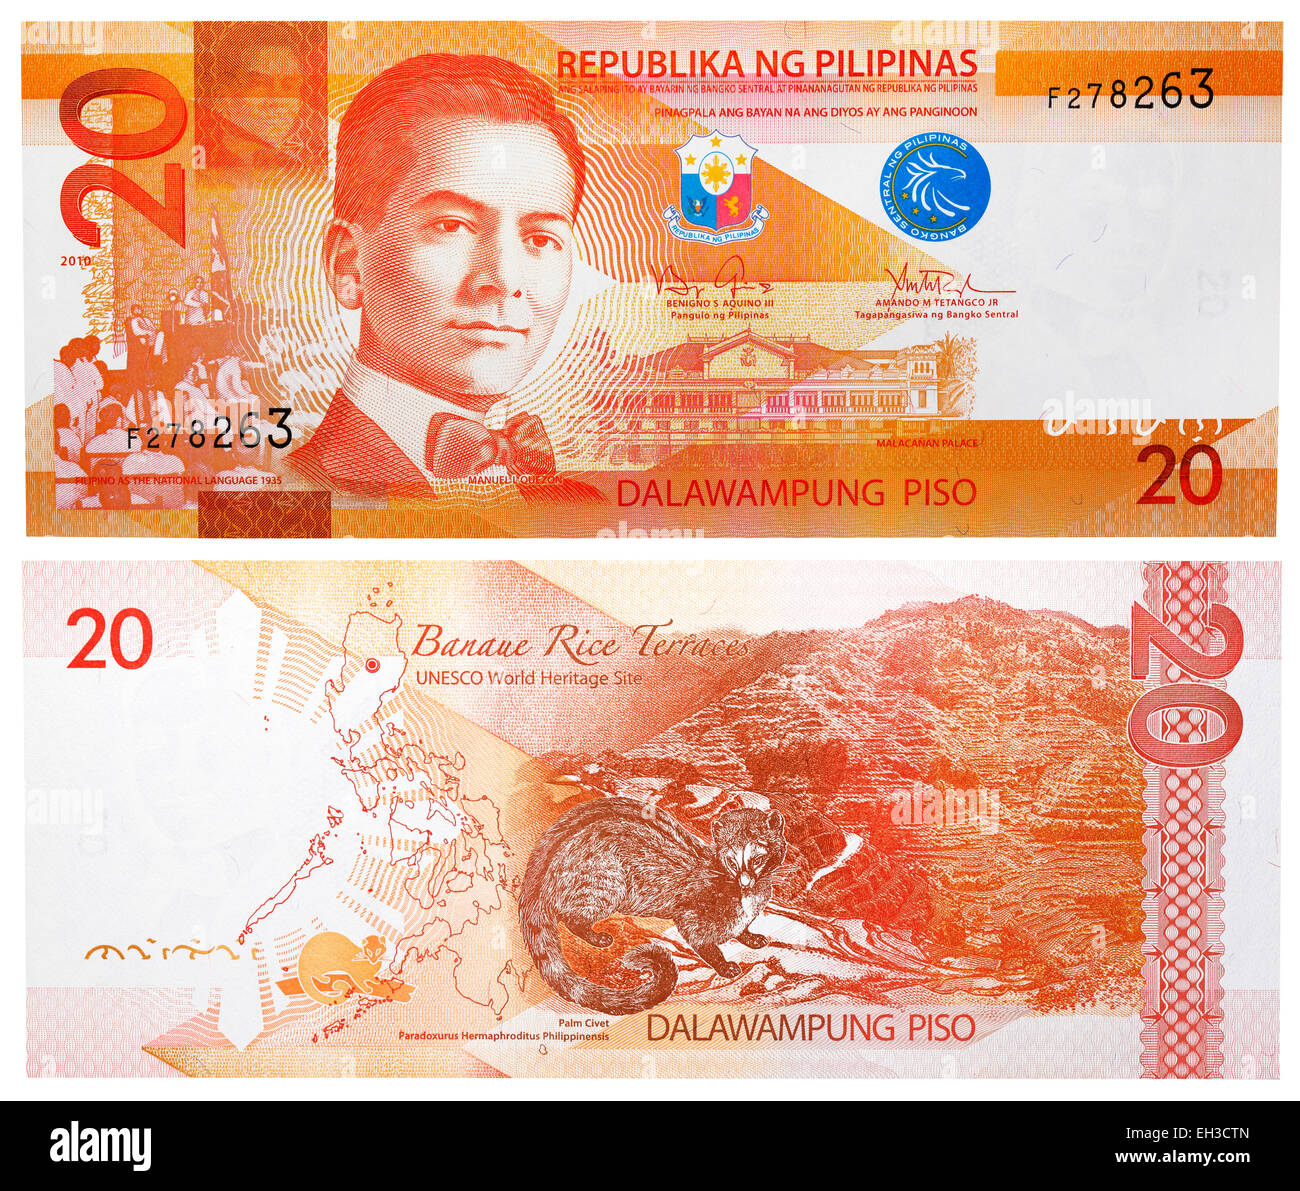 20 piso banknote, Philippines, 2010 Stock Photo